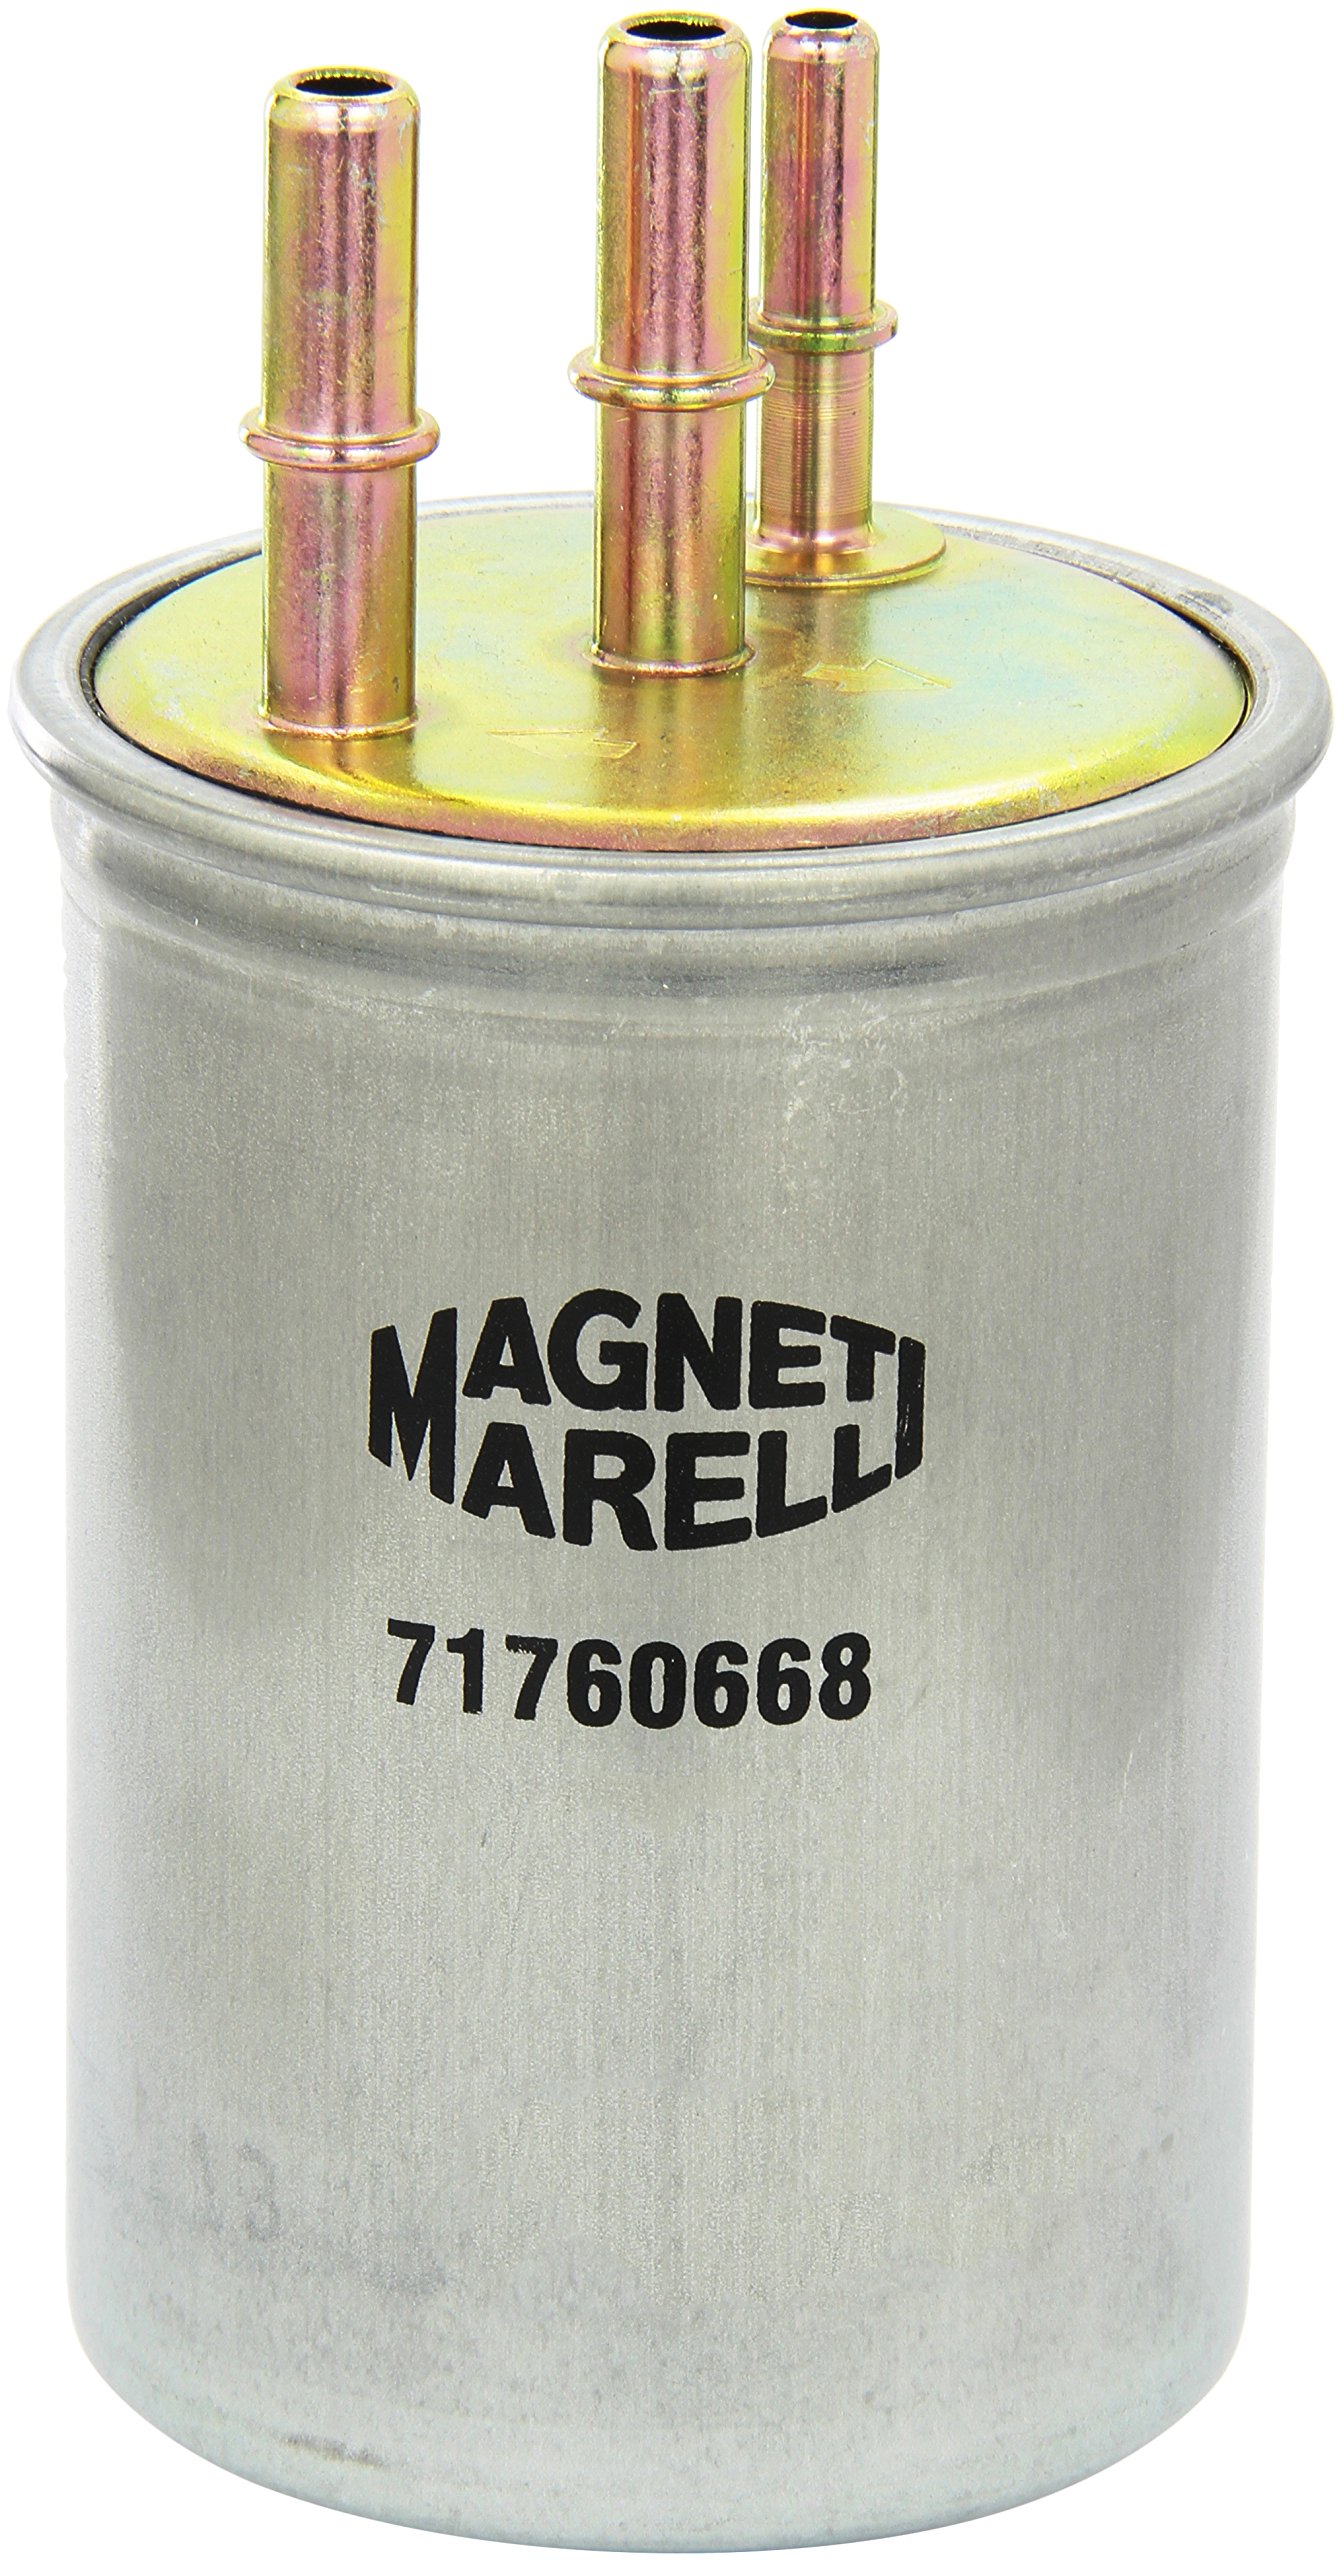 Magneti Marelli 152071760668 Kraftstofffilter von Magneti Marelli